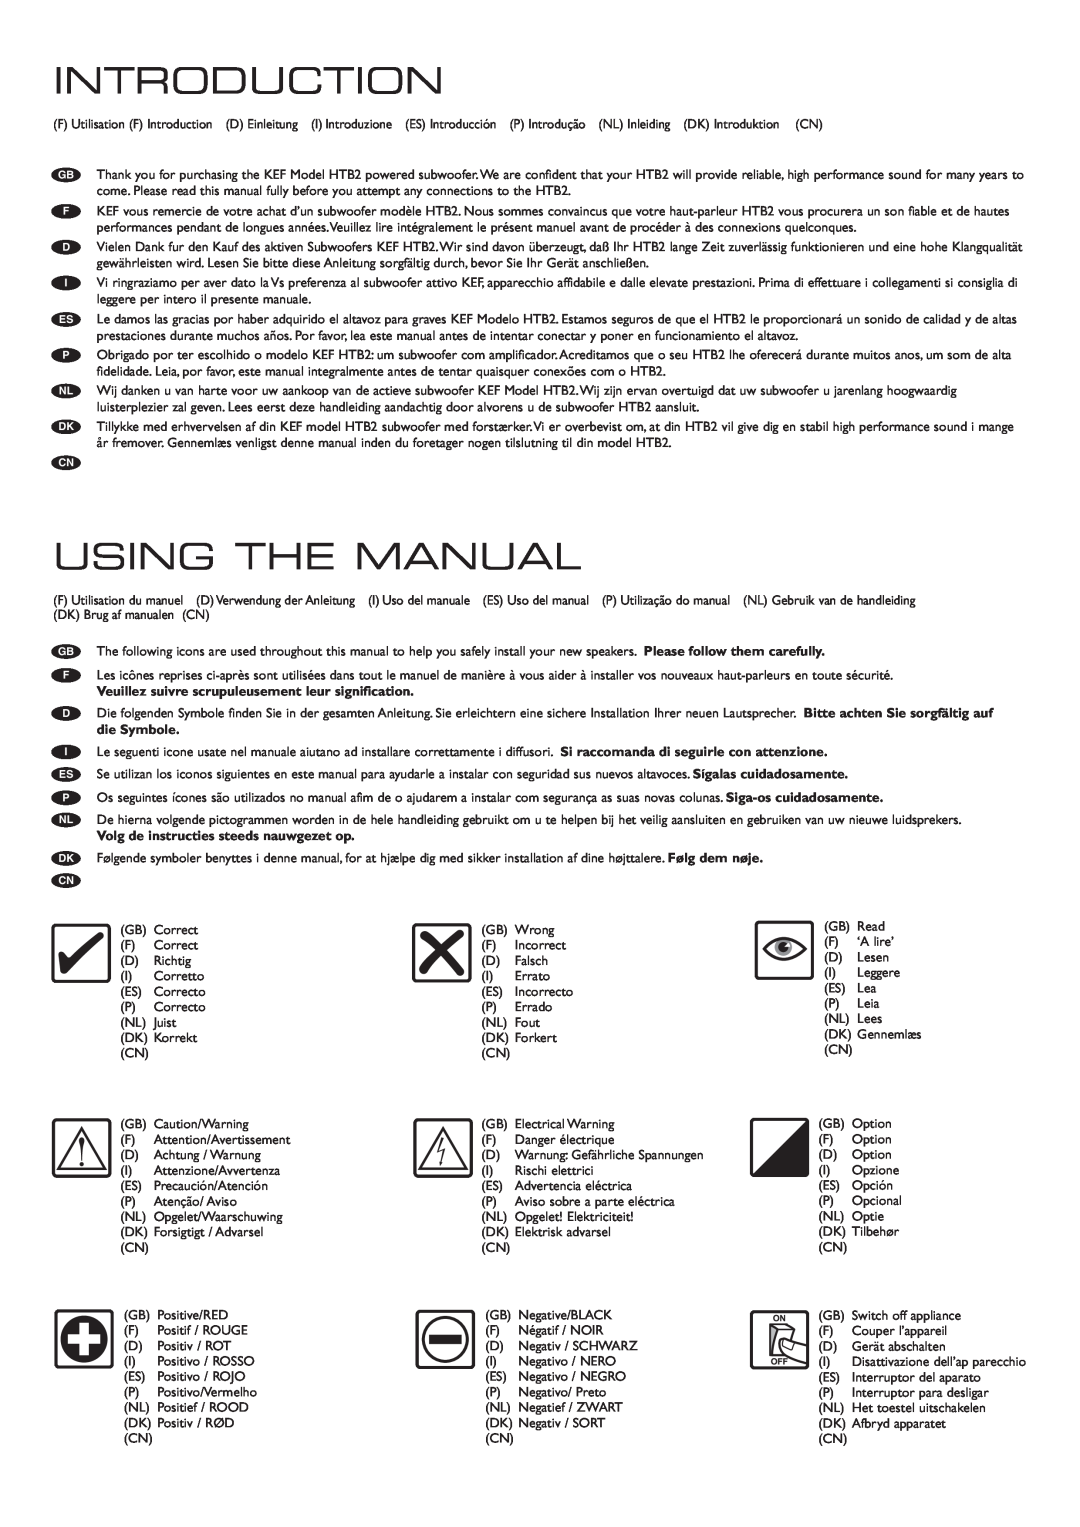 KEF Audio HTB2 installation manual Introduction, Using The Manual, die Symbole, Volg de instructies steeds nauwgezet op 